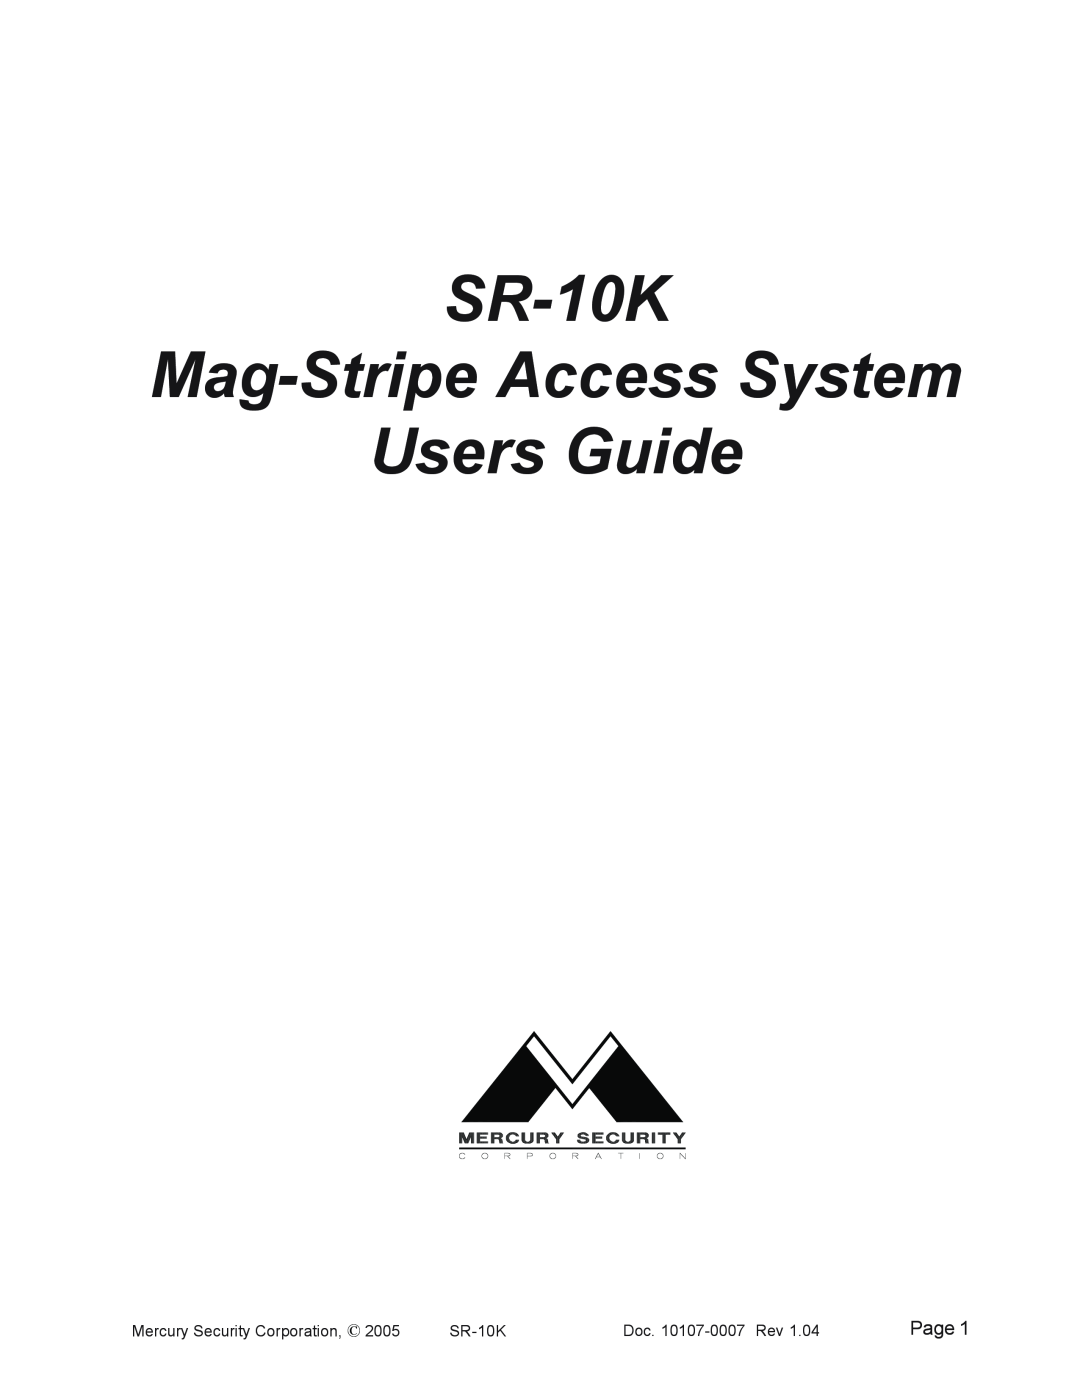 Mercury SR-10K Mag-Stripe Access System manual SR-10K Mag-StripeAccess System Users Guide, Page, Doc. 10107-0007Rev 